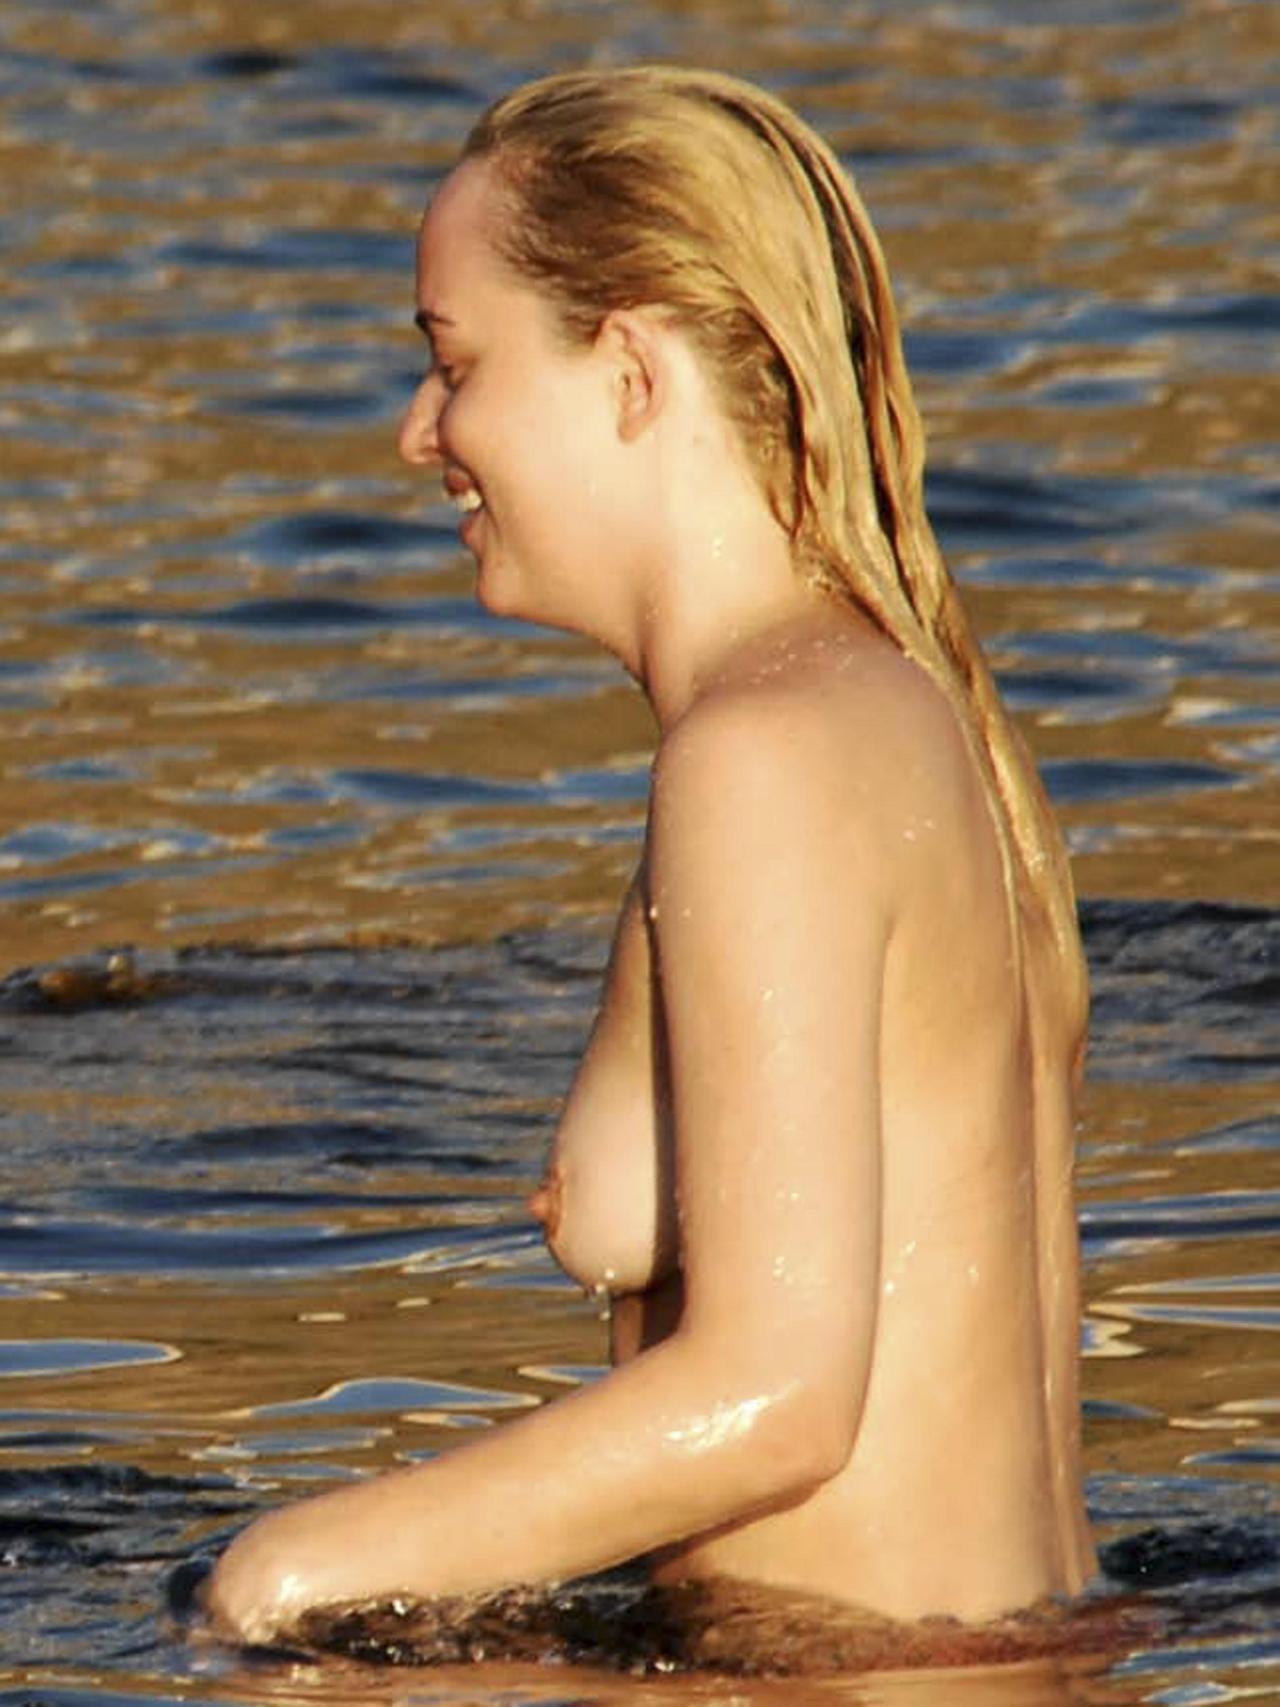 toplessbeachcelebs:Dakota JohnsonÂ swimming topless in Pantelleria, ItalyÂ (October